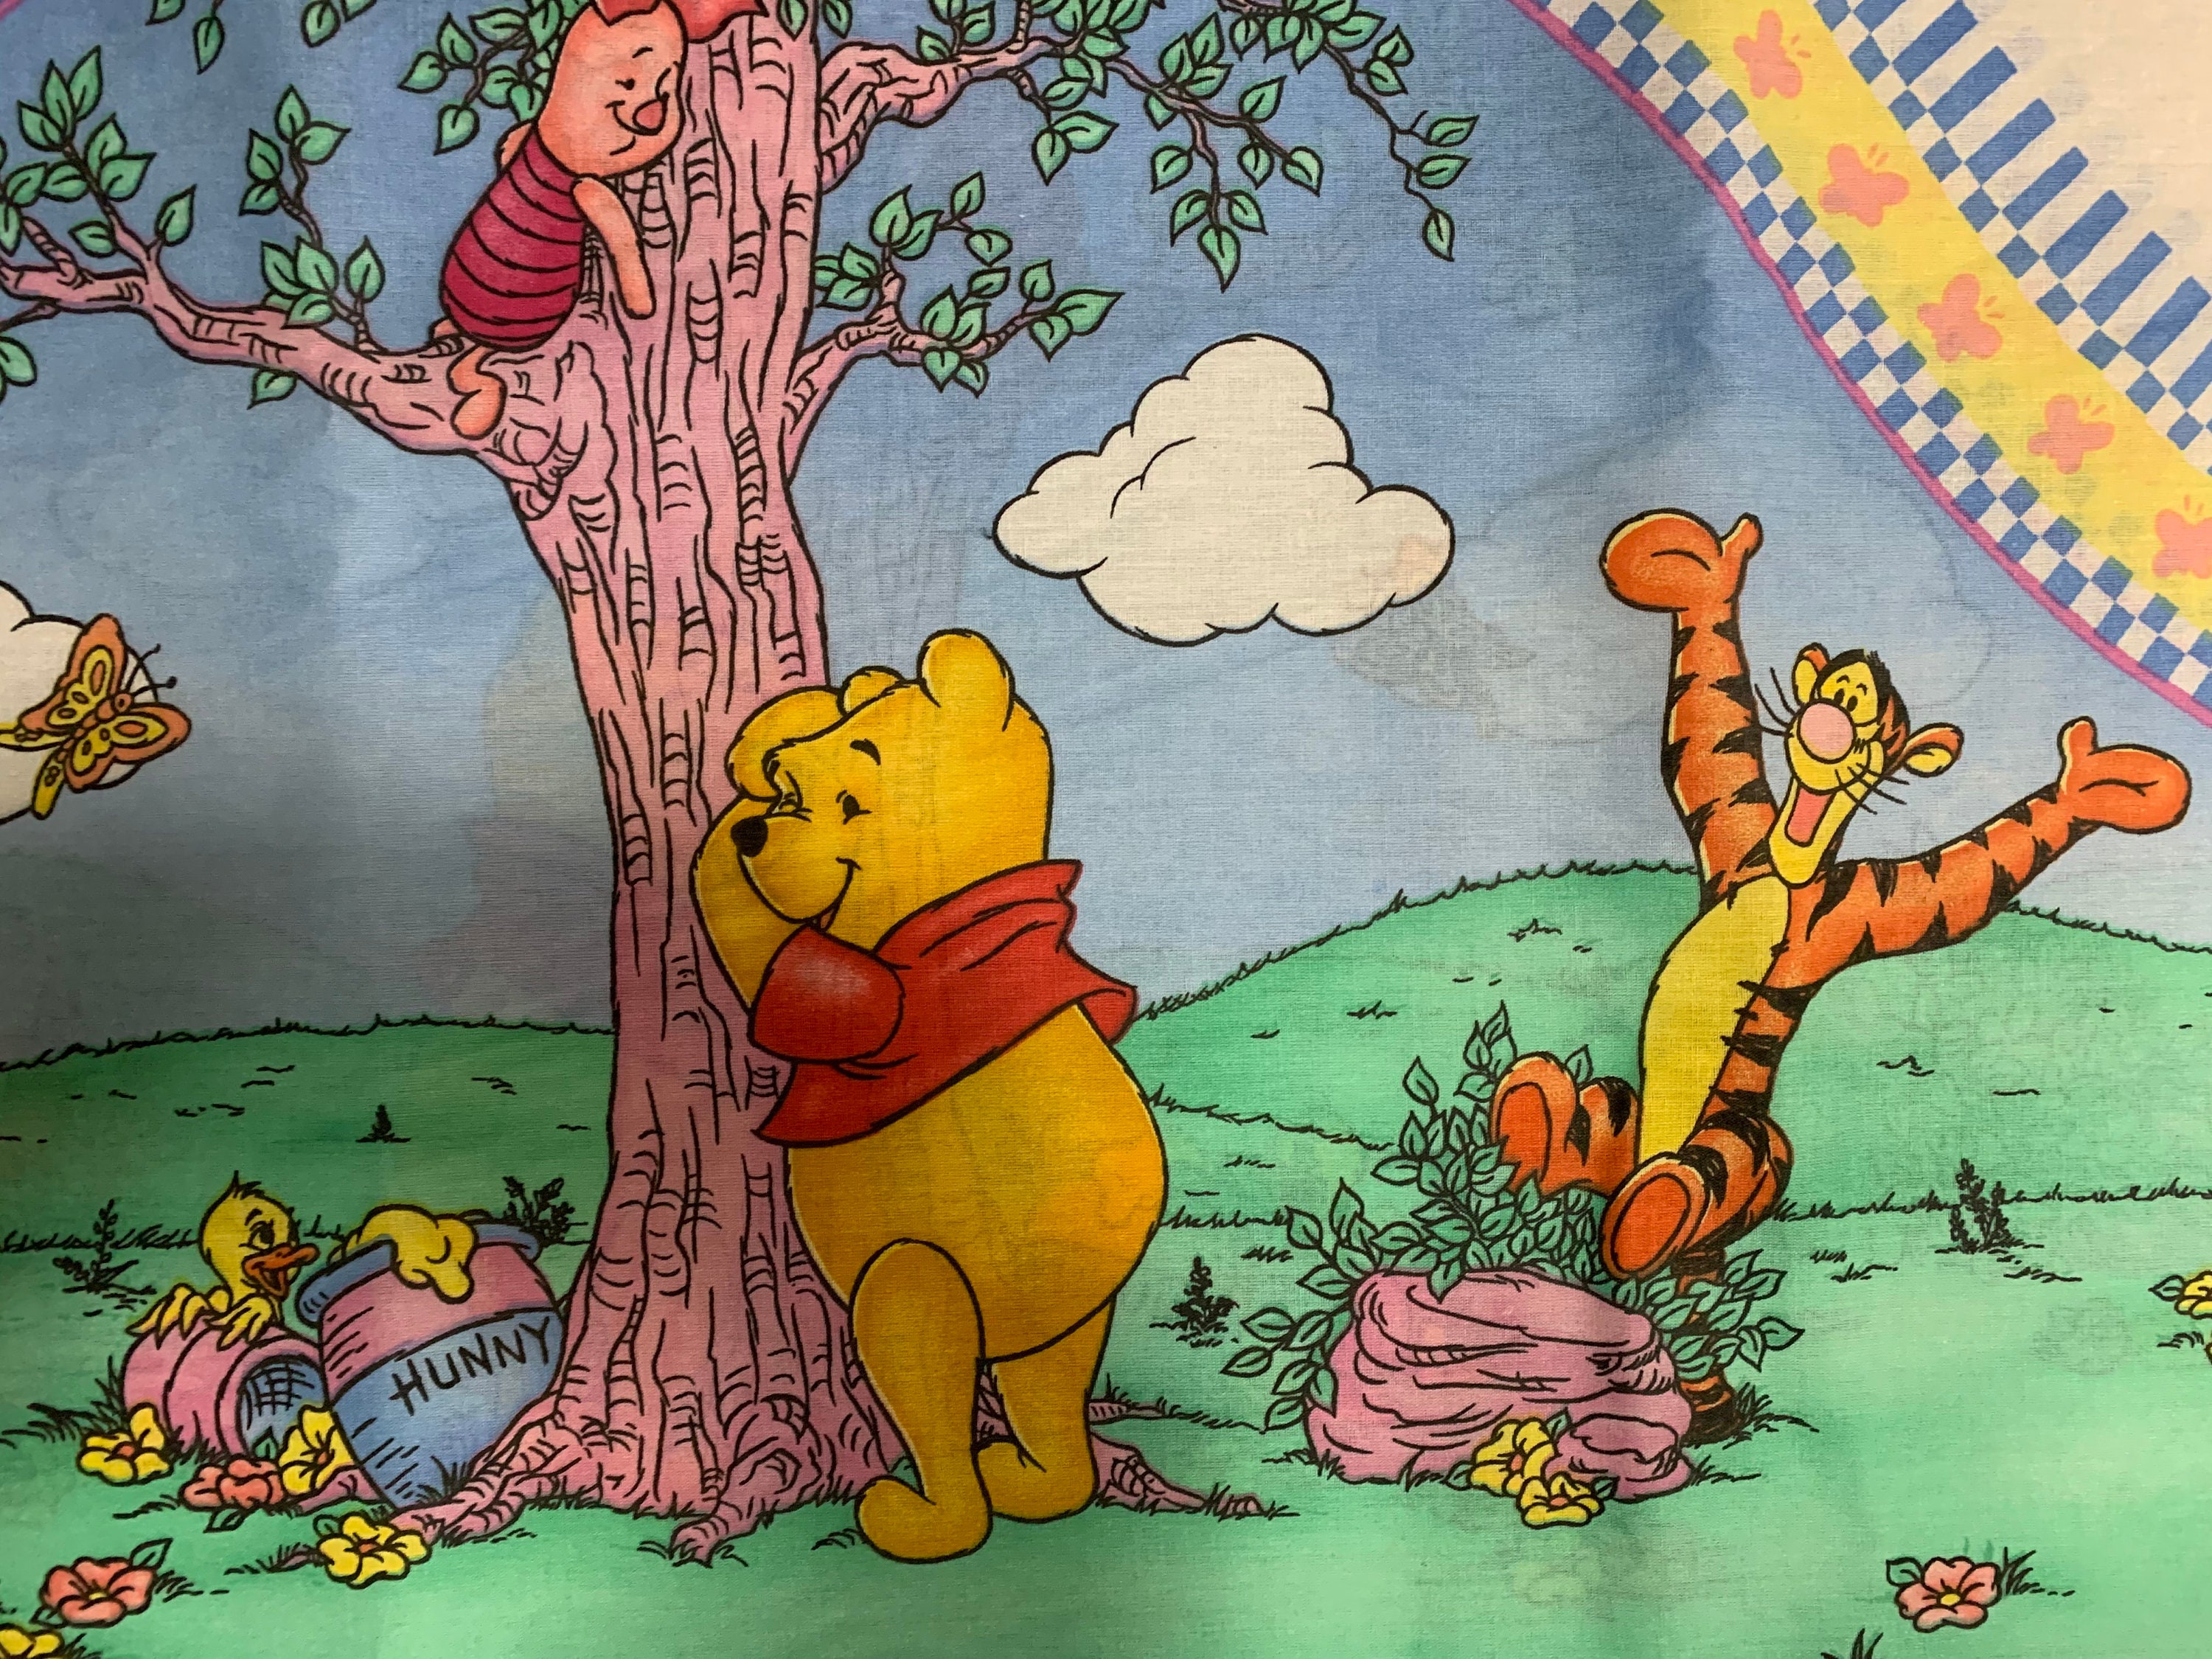 Winnie the Pooh fabric, Classic Pooh, last piece